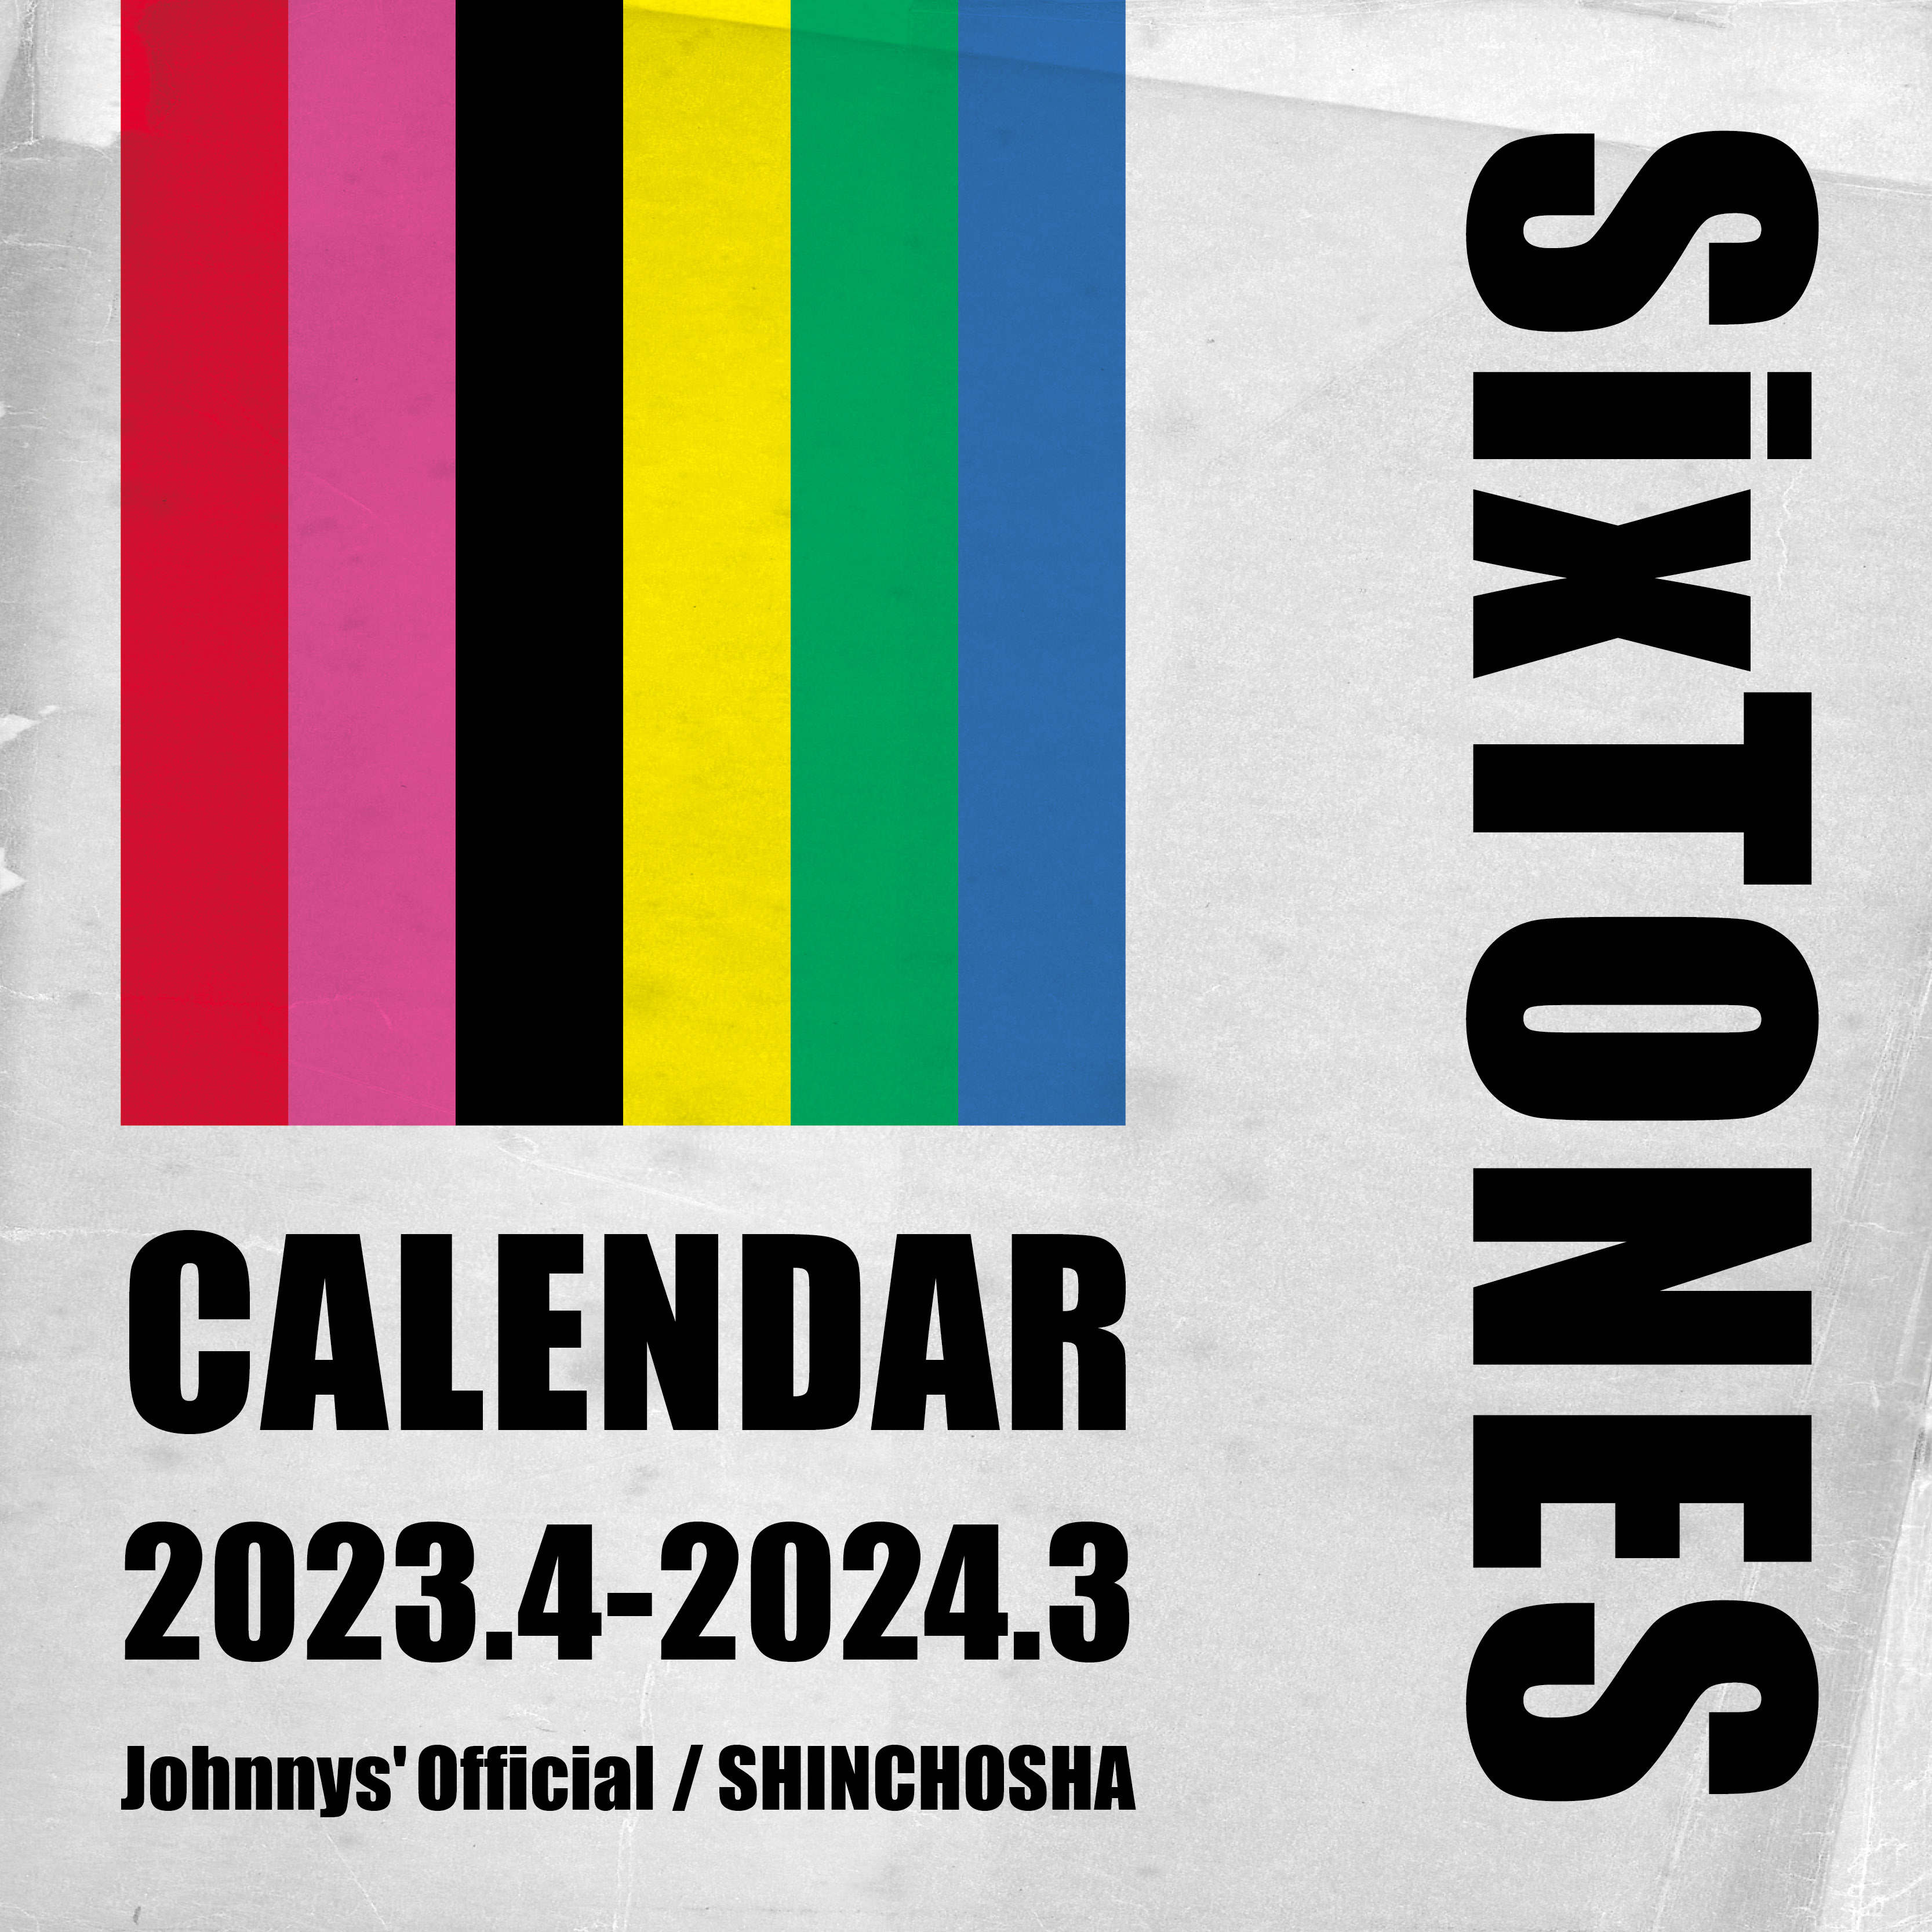 SixTONESカレンダー2023.4→2024.3【公式】 (@shinchocale23) / Twitter